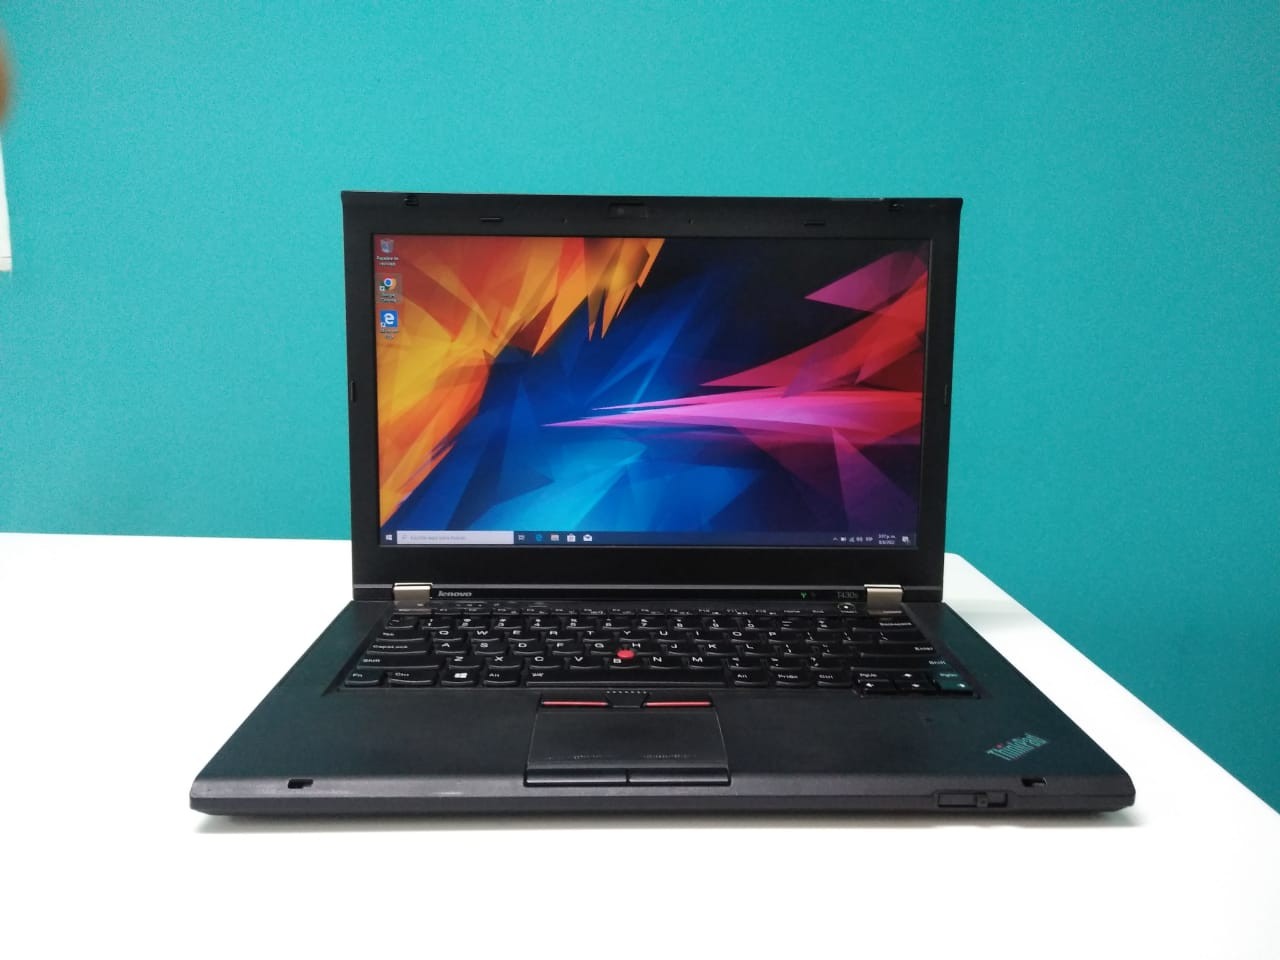 computadoras y laptops - Laptop LENOVO ThinkPad T430s Core i5 VGA 250GB4GB RAM 3era Generacion 14 Pulgad